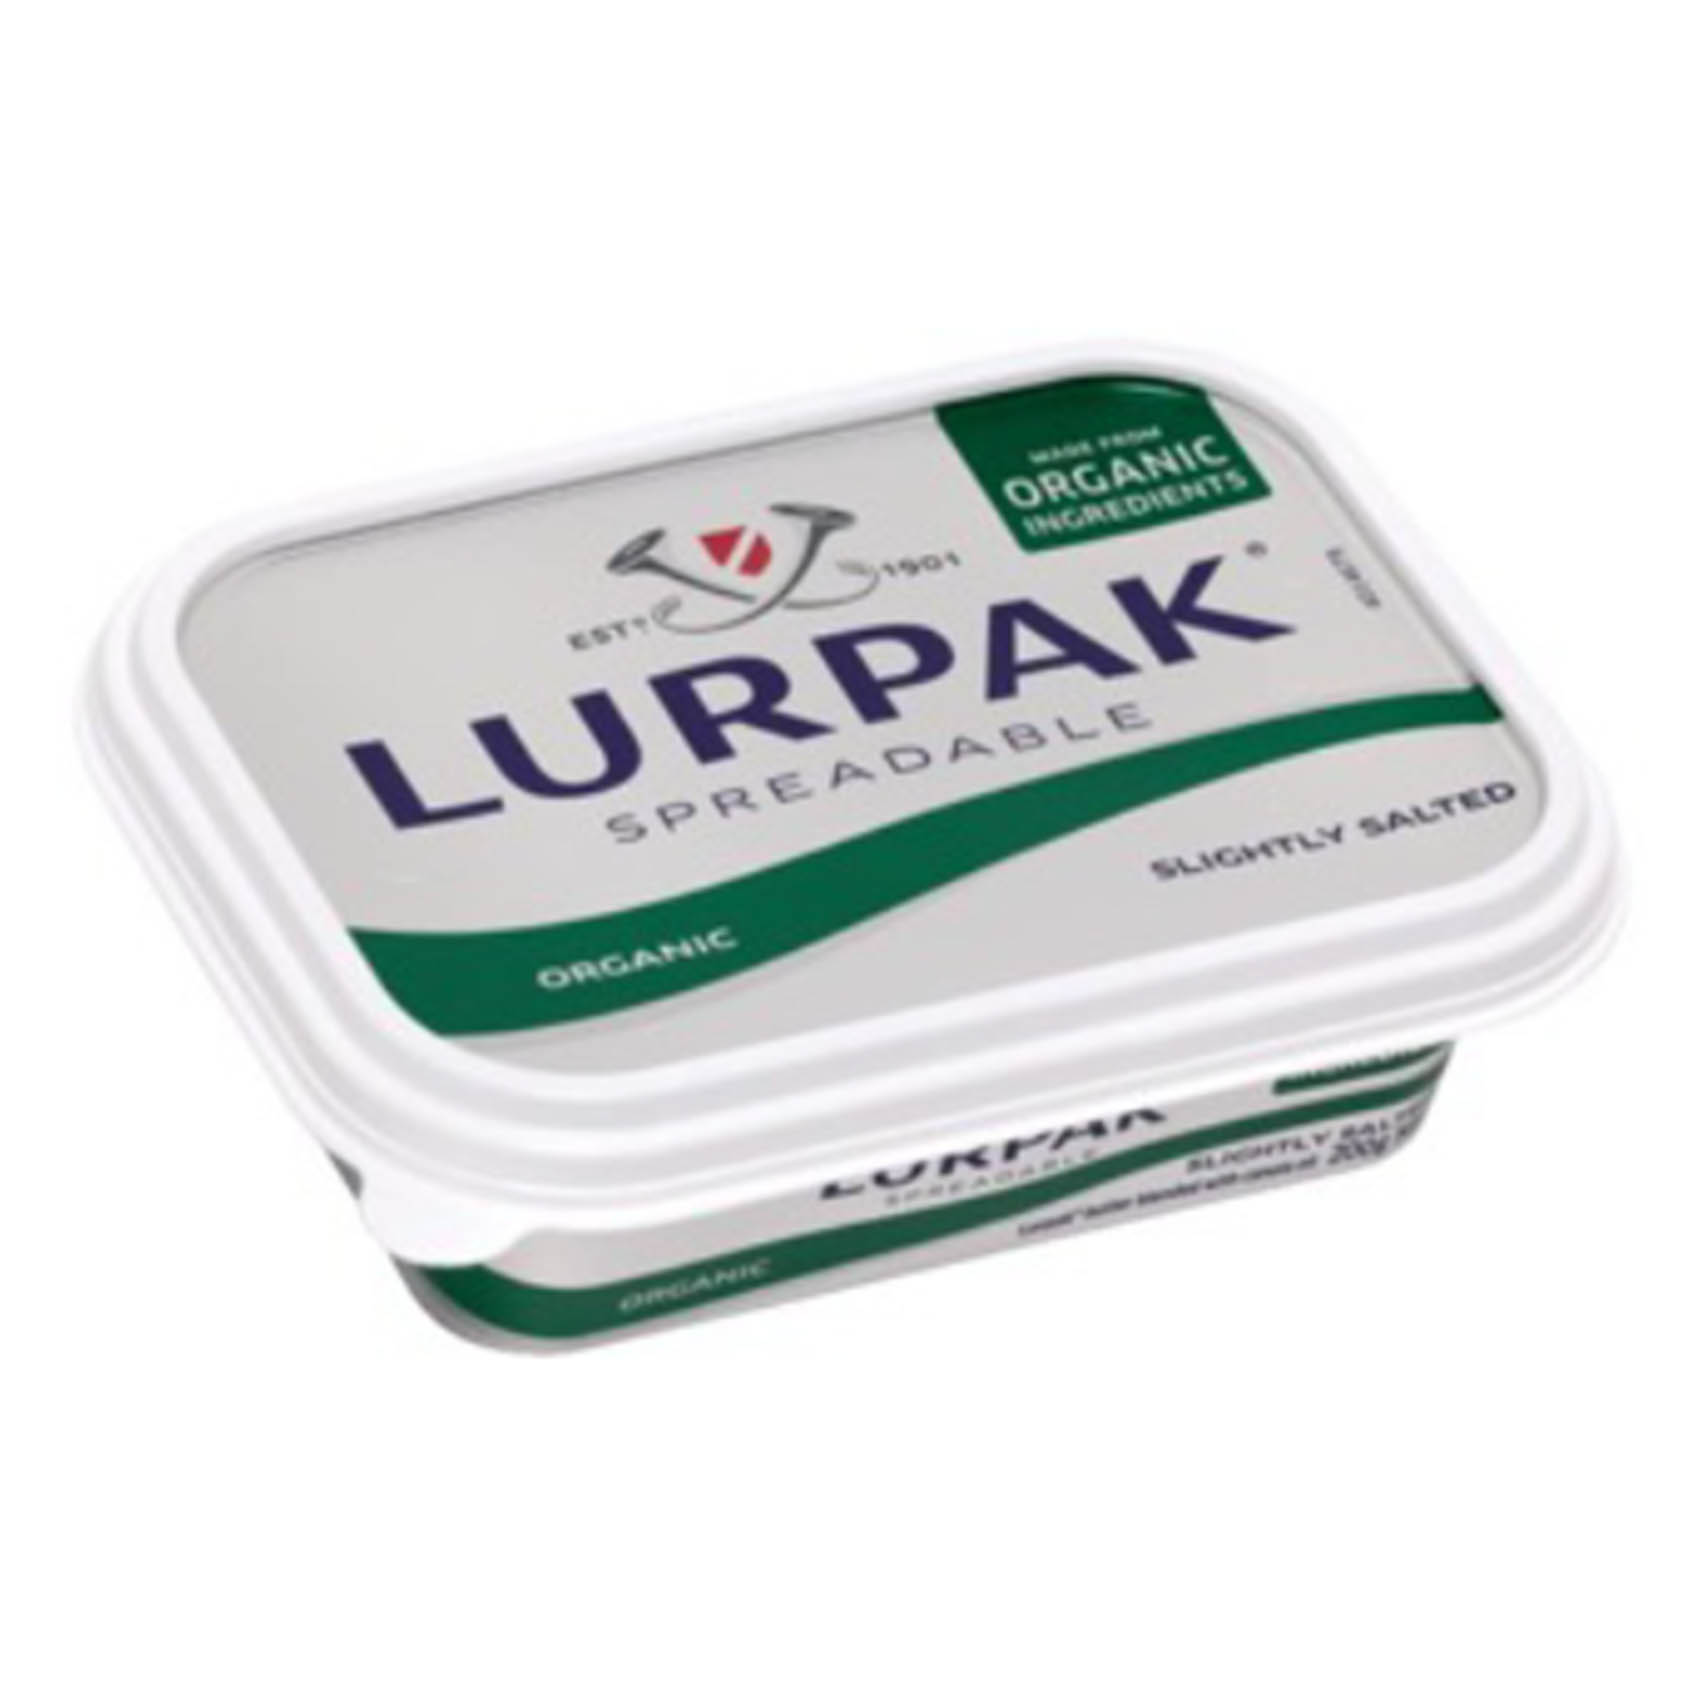 Lurpak Salted Organicanic Spreadable 200G